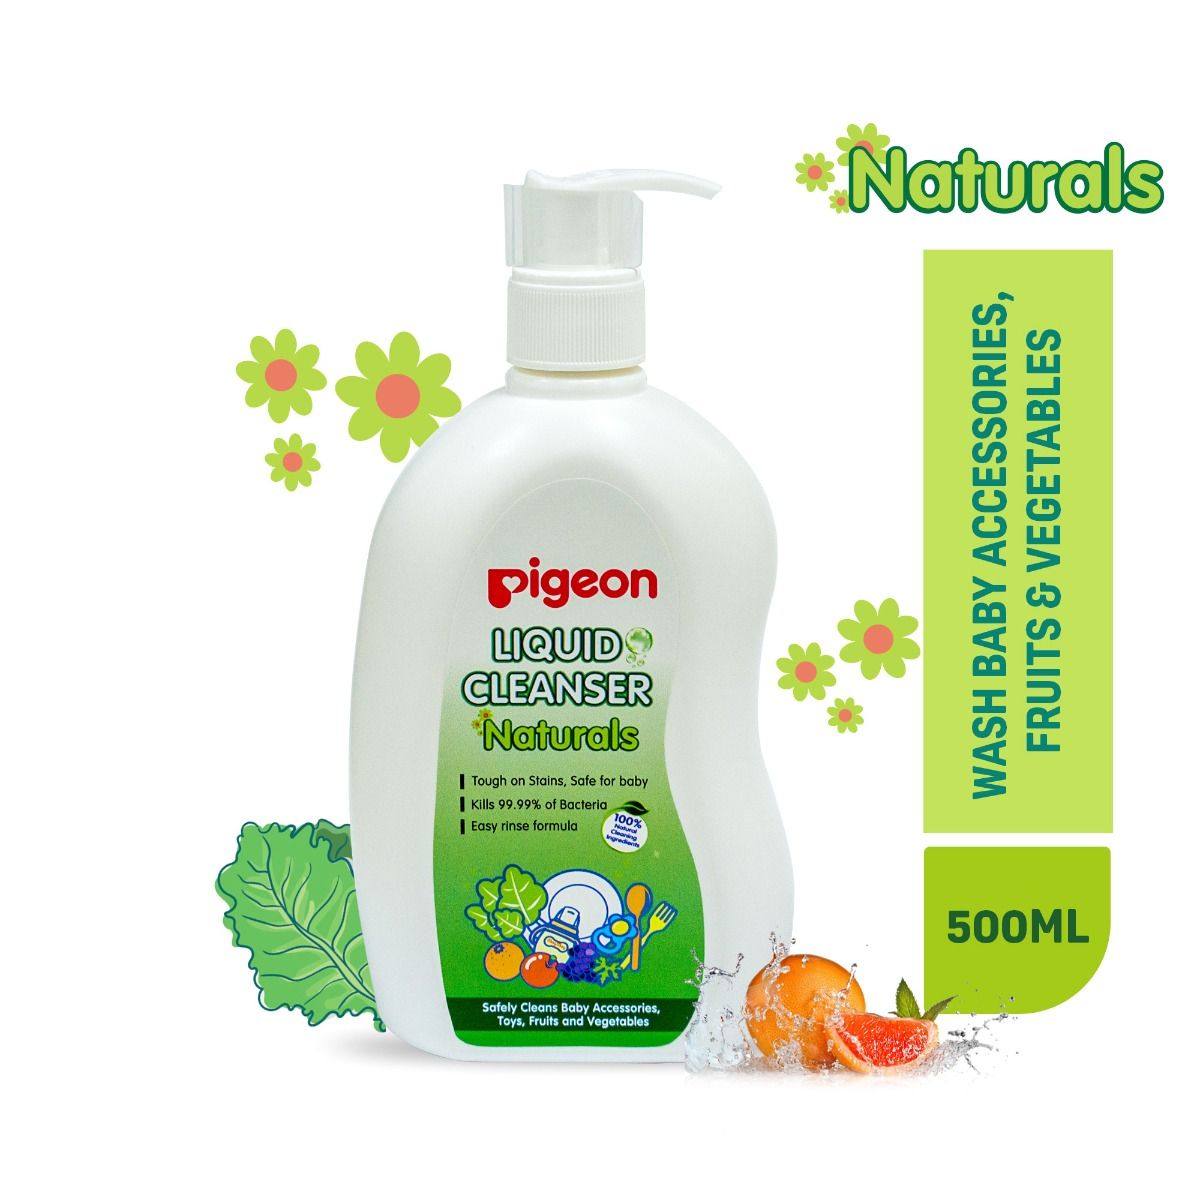 Pigeon Liquid Cleanser, 500 ml, Pack of 1 